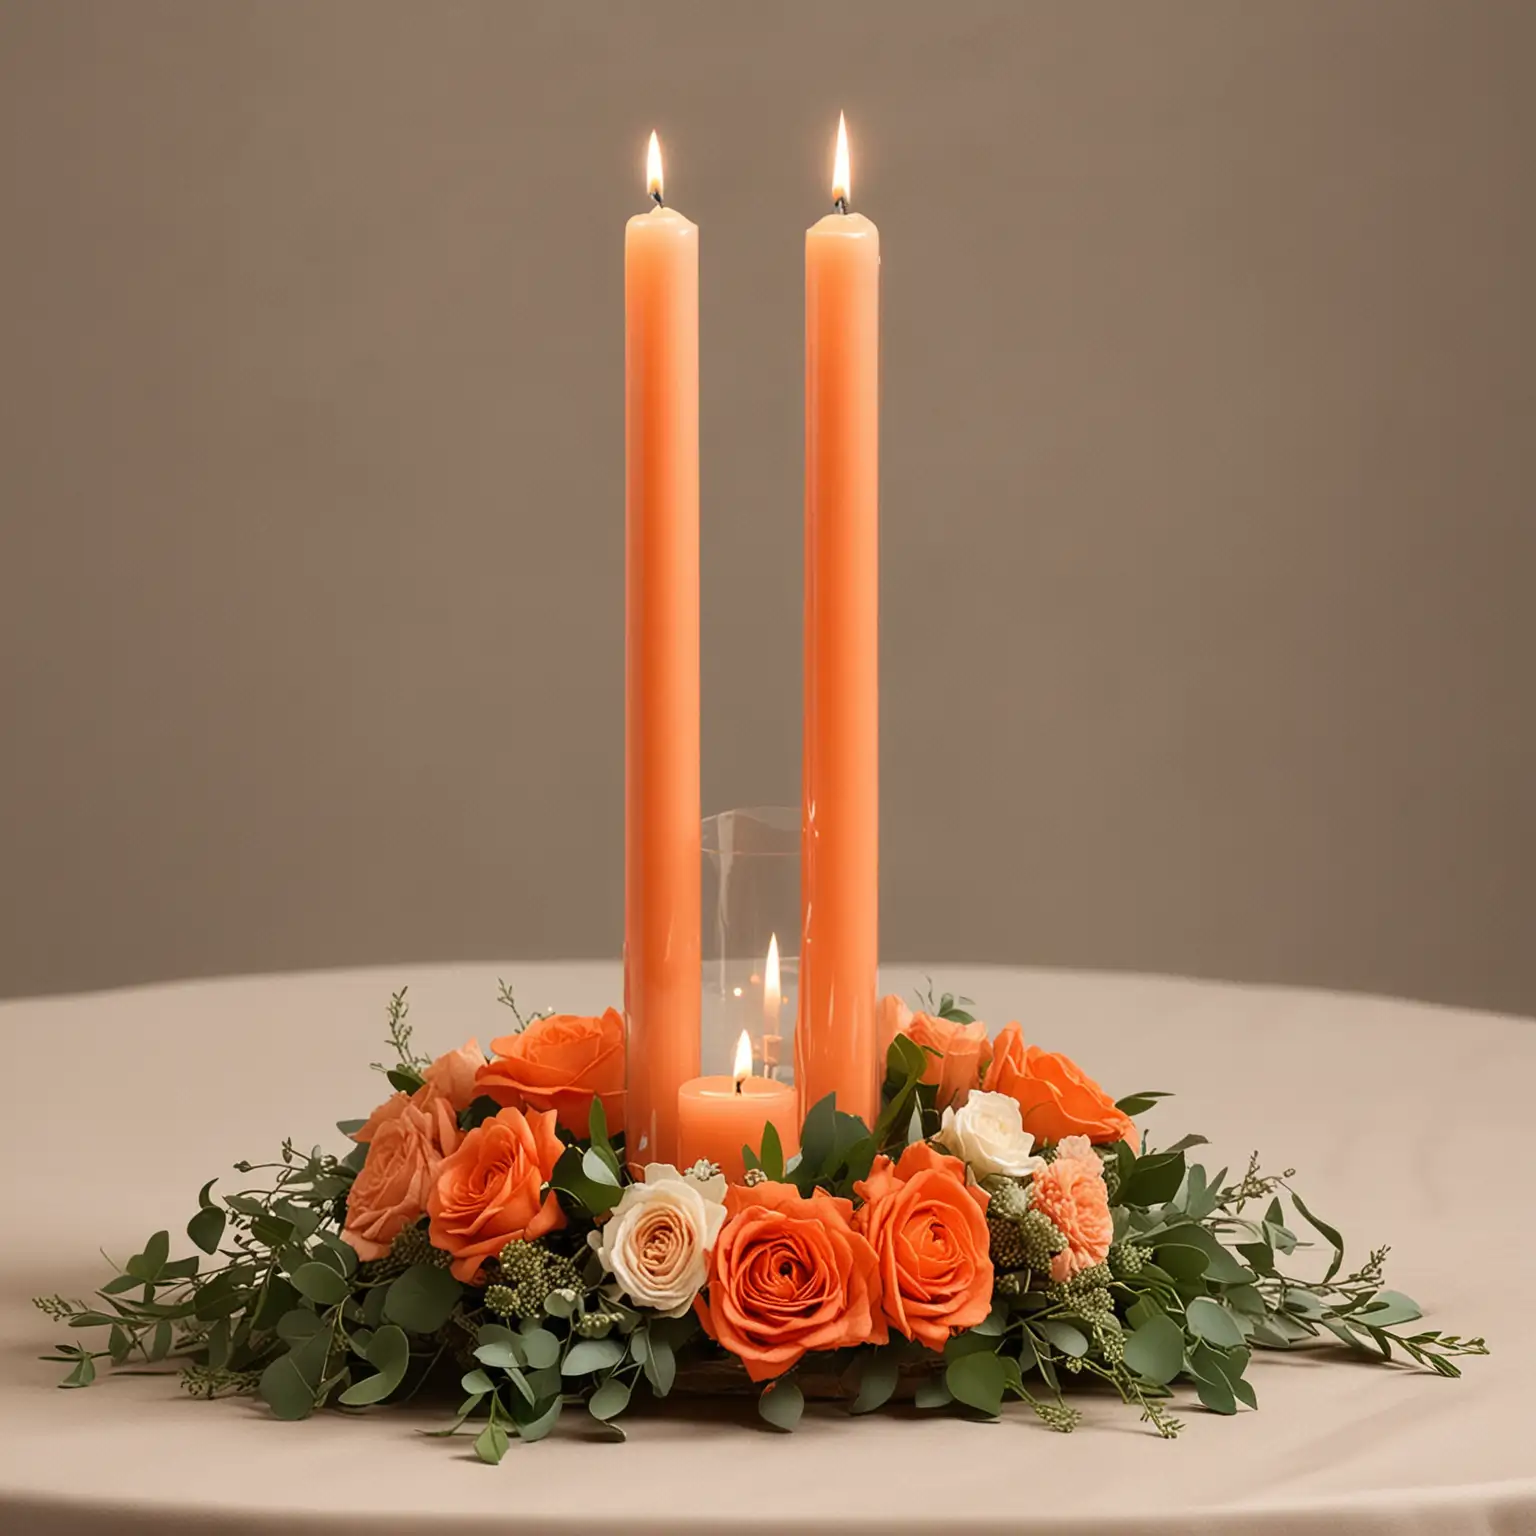 elegant wedding center piece with an orange pillar candle; keep the background neutral